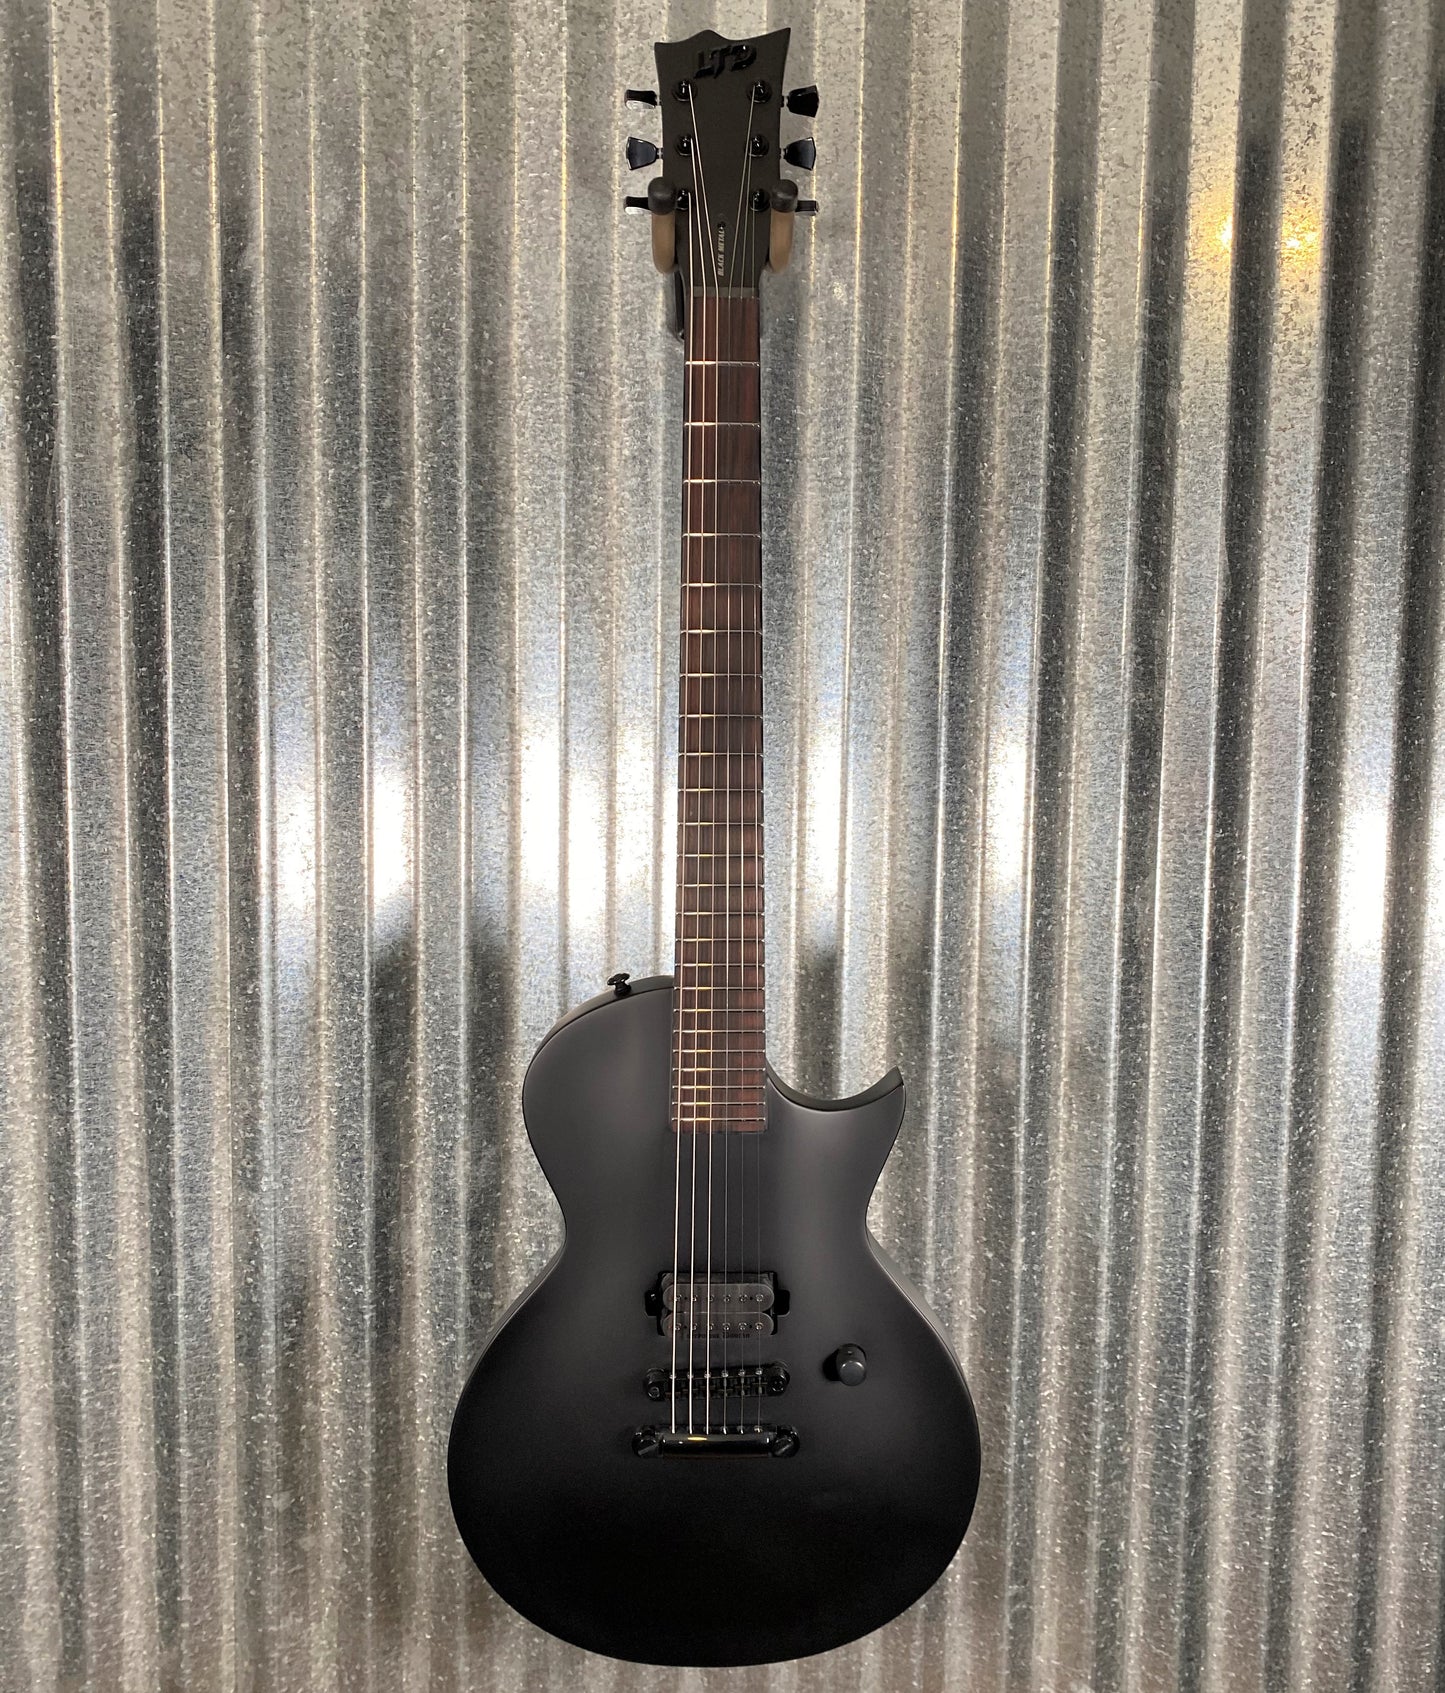 ESP LTD EC Black Metal Eclipse Seymour Duncan Black Satin Guitar LECBKMBLKS #1074 Used